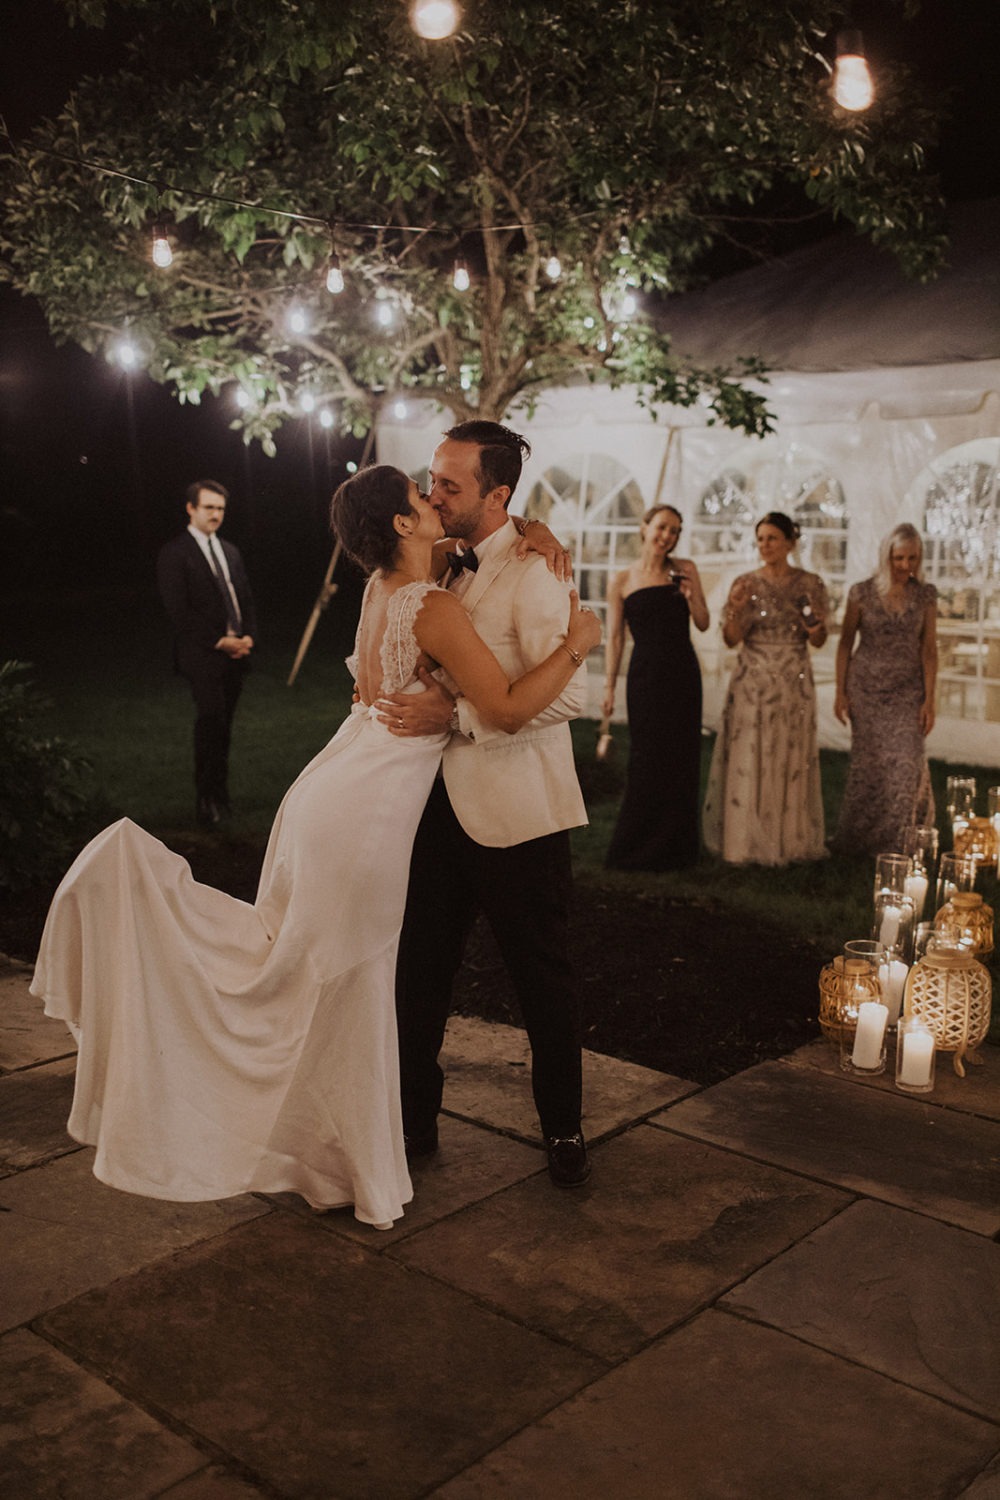 Couple kisses while dancing at backyard wedding